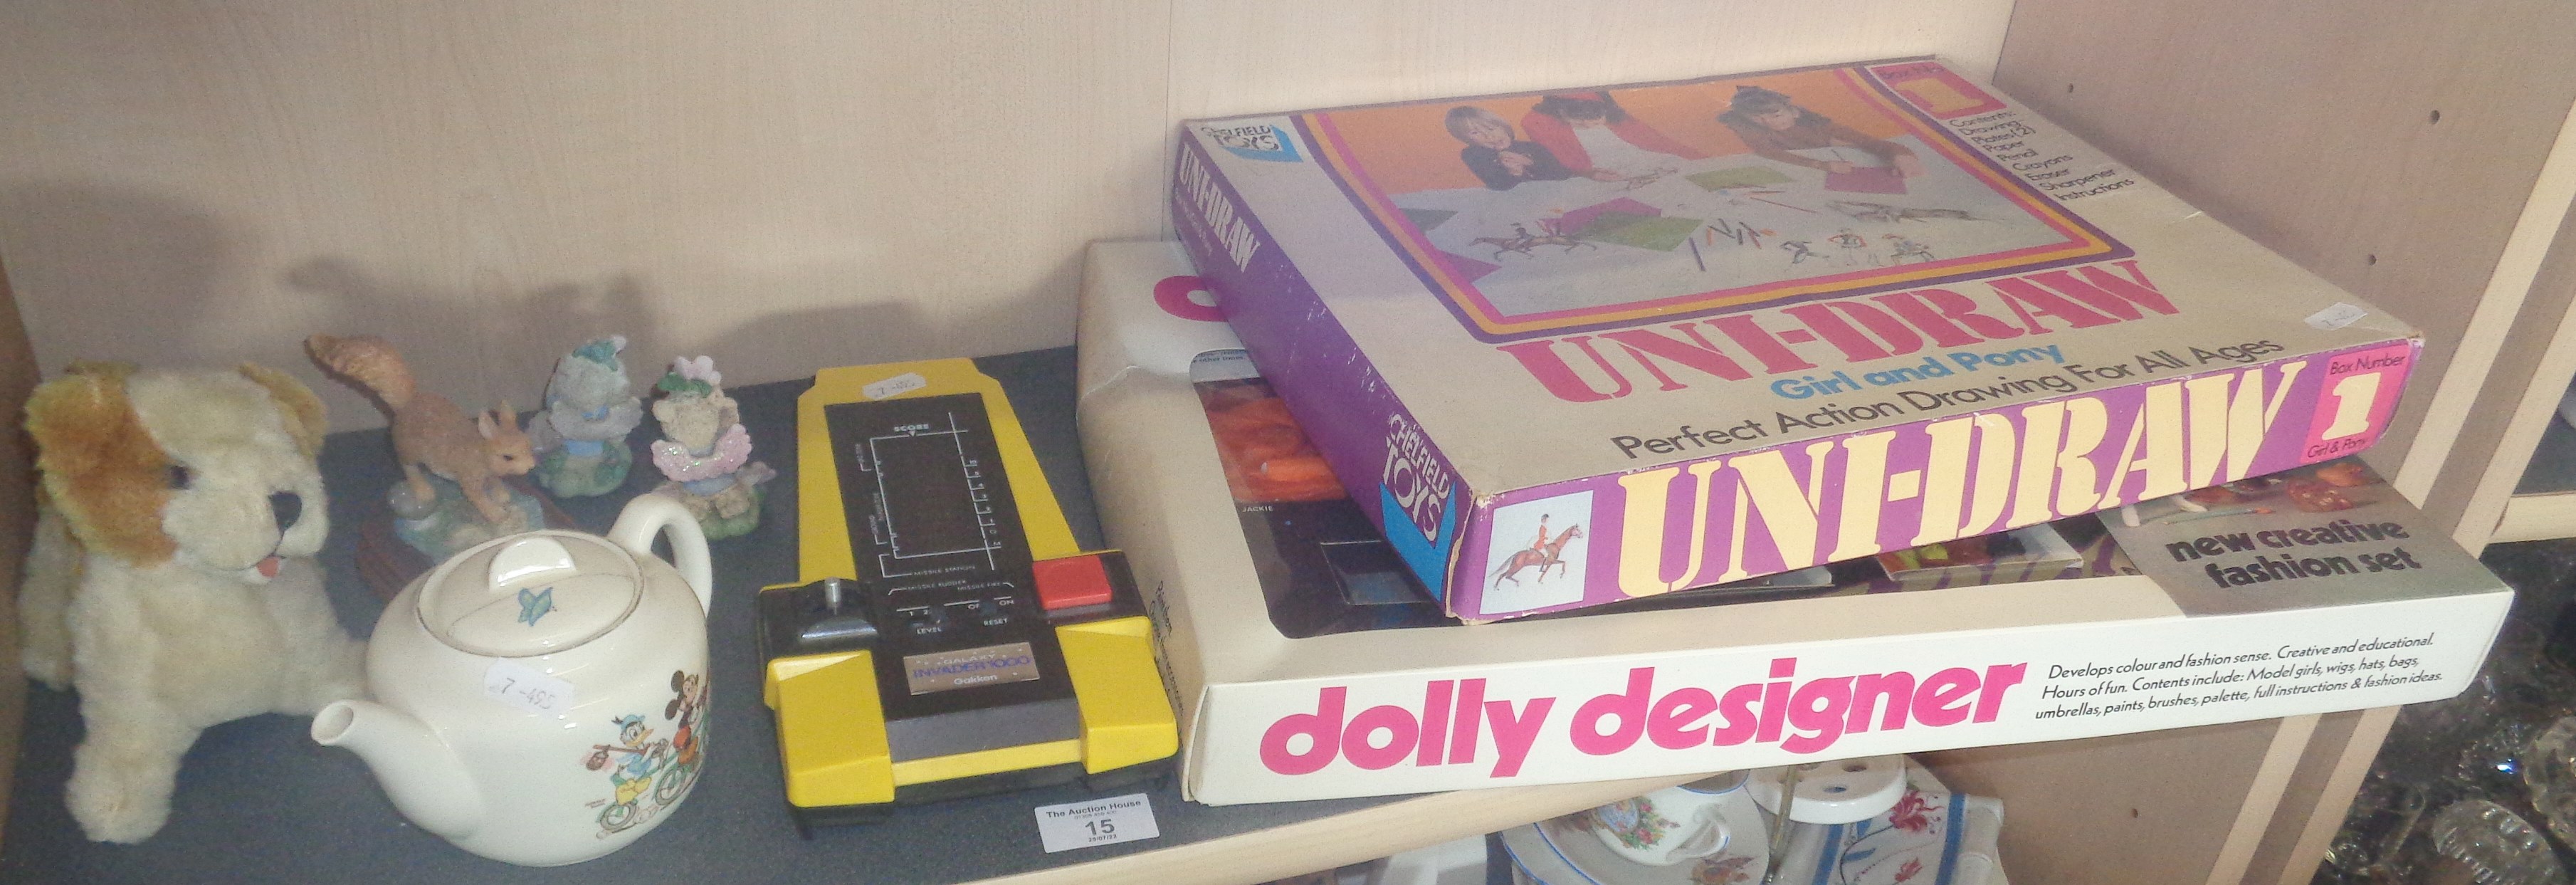 Beswick Disney teapot (A/F), a Uni-Draw kit, a Dolly Designer kit, a Galaxy Invader 1000 game etc.